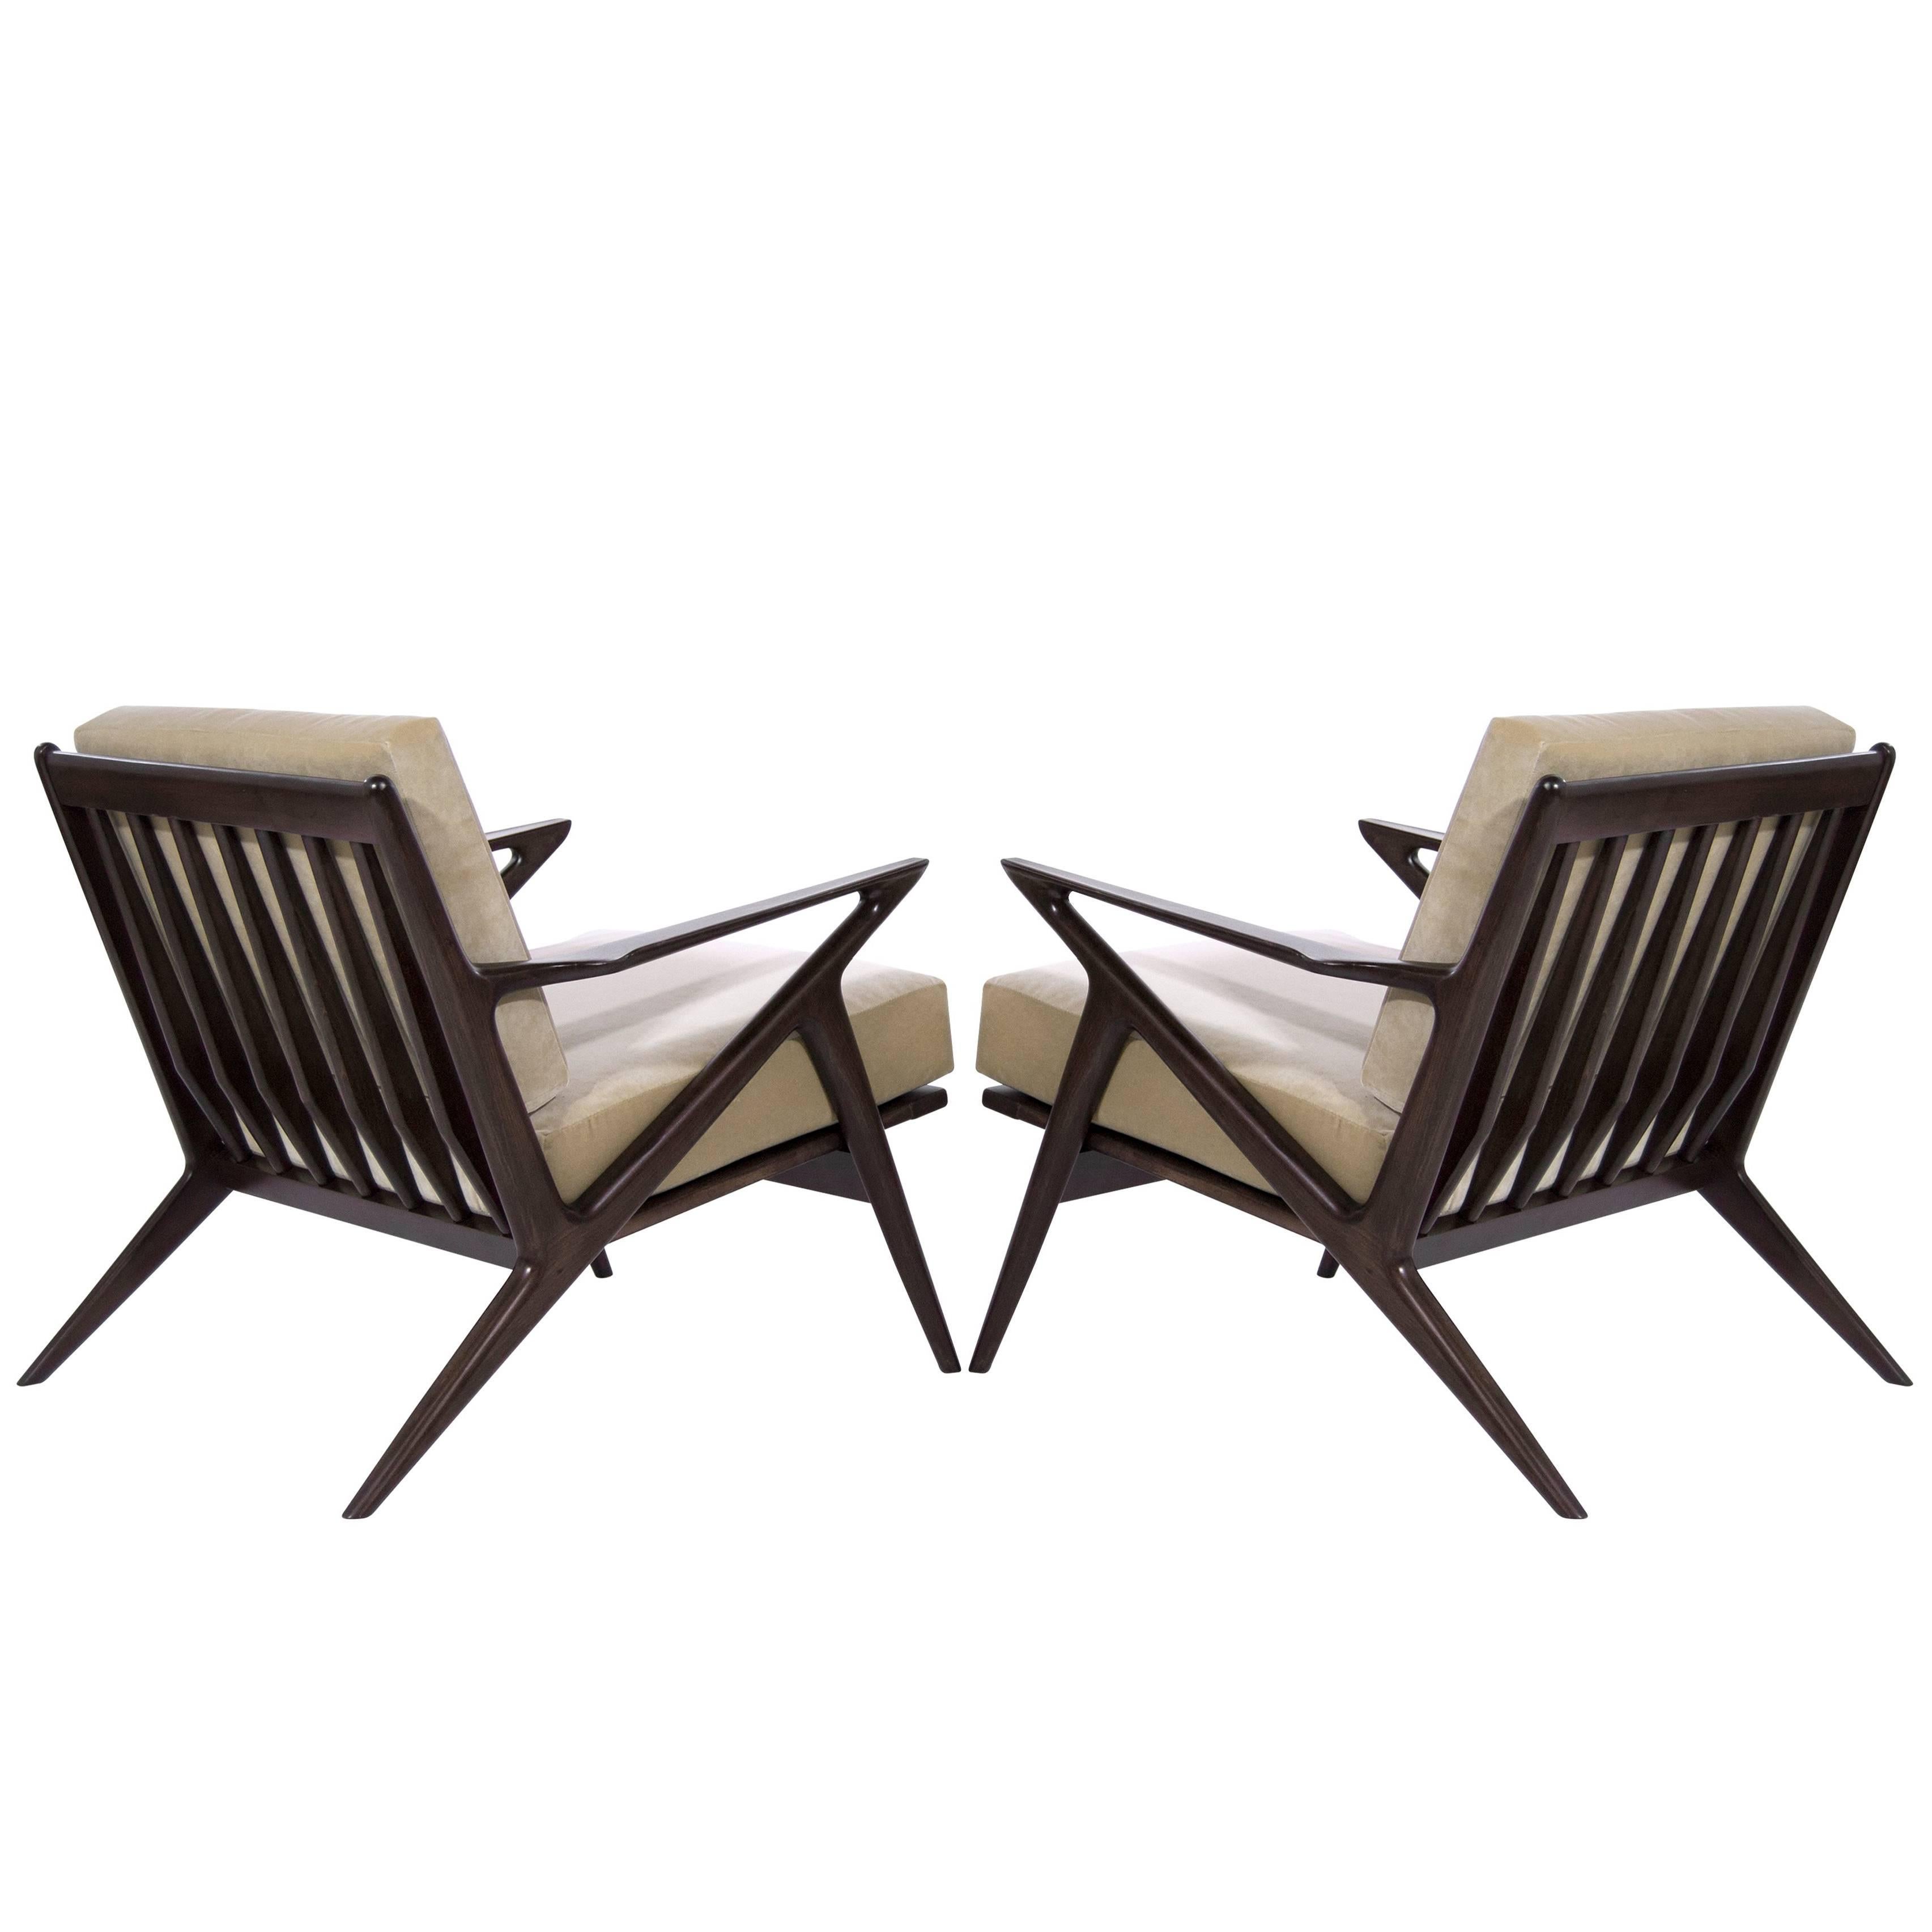 Iconic ‘Z’ lounge chairs designed by Poul Jensen for Selig, Denmark, circa 1950s.
Newly upholstered in beige velvet.